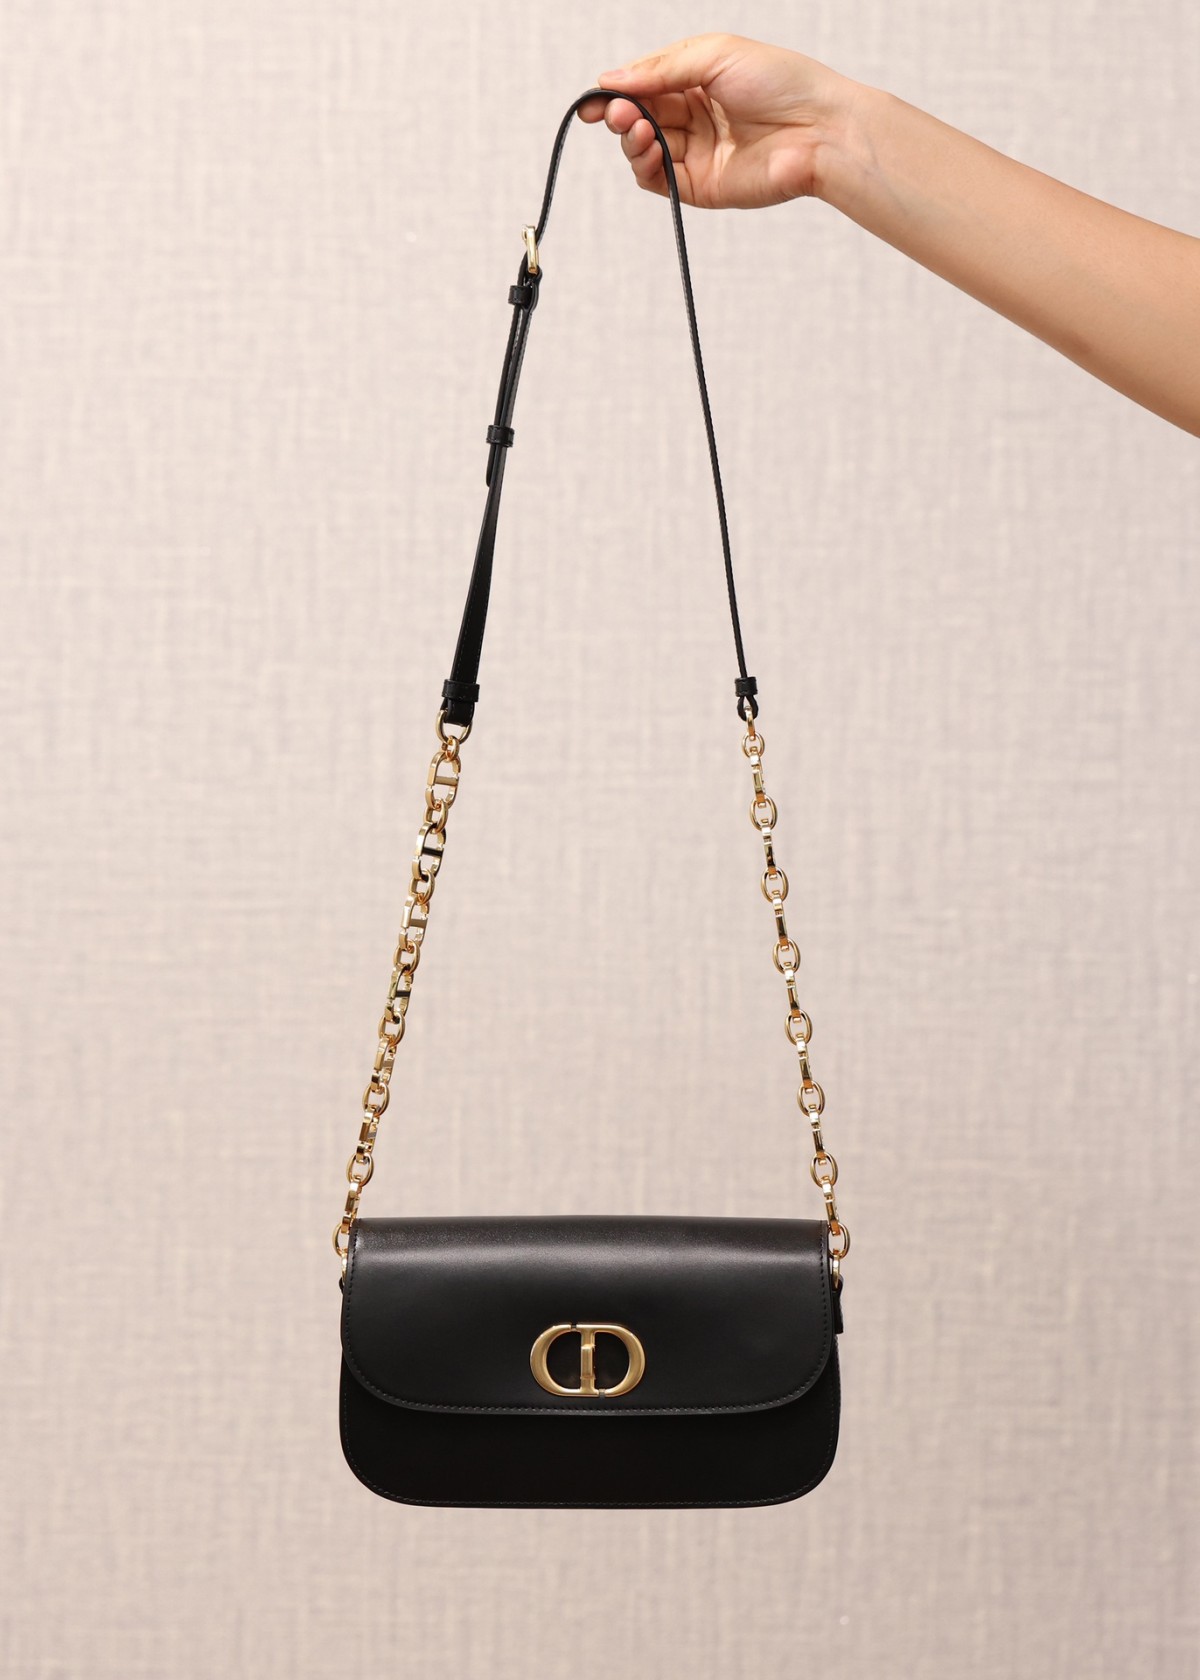 How good quality is a Shebag replica Dior 30 Montaigne Avenue bag? (2023 updated)-ร้านค้าออนไลน์กระเป๋า Louis Vuitton ปลอมคุณภาพดีที่สุด, กระเป๋าออกแบบจำลอง ru